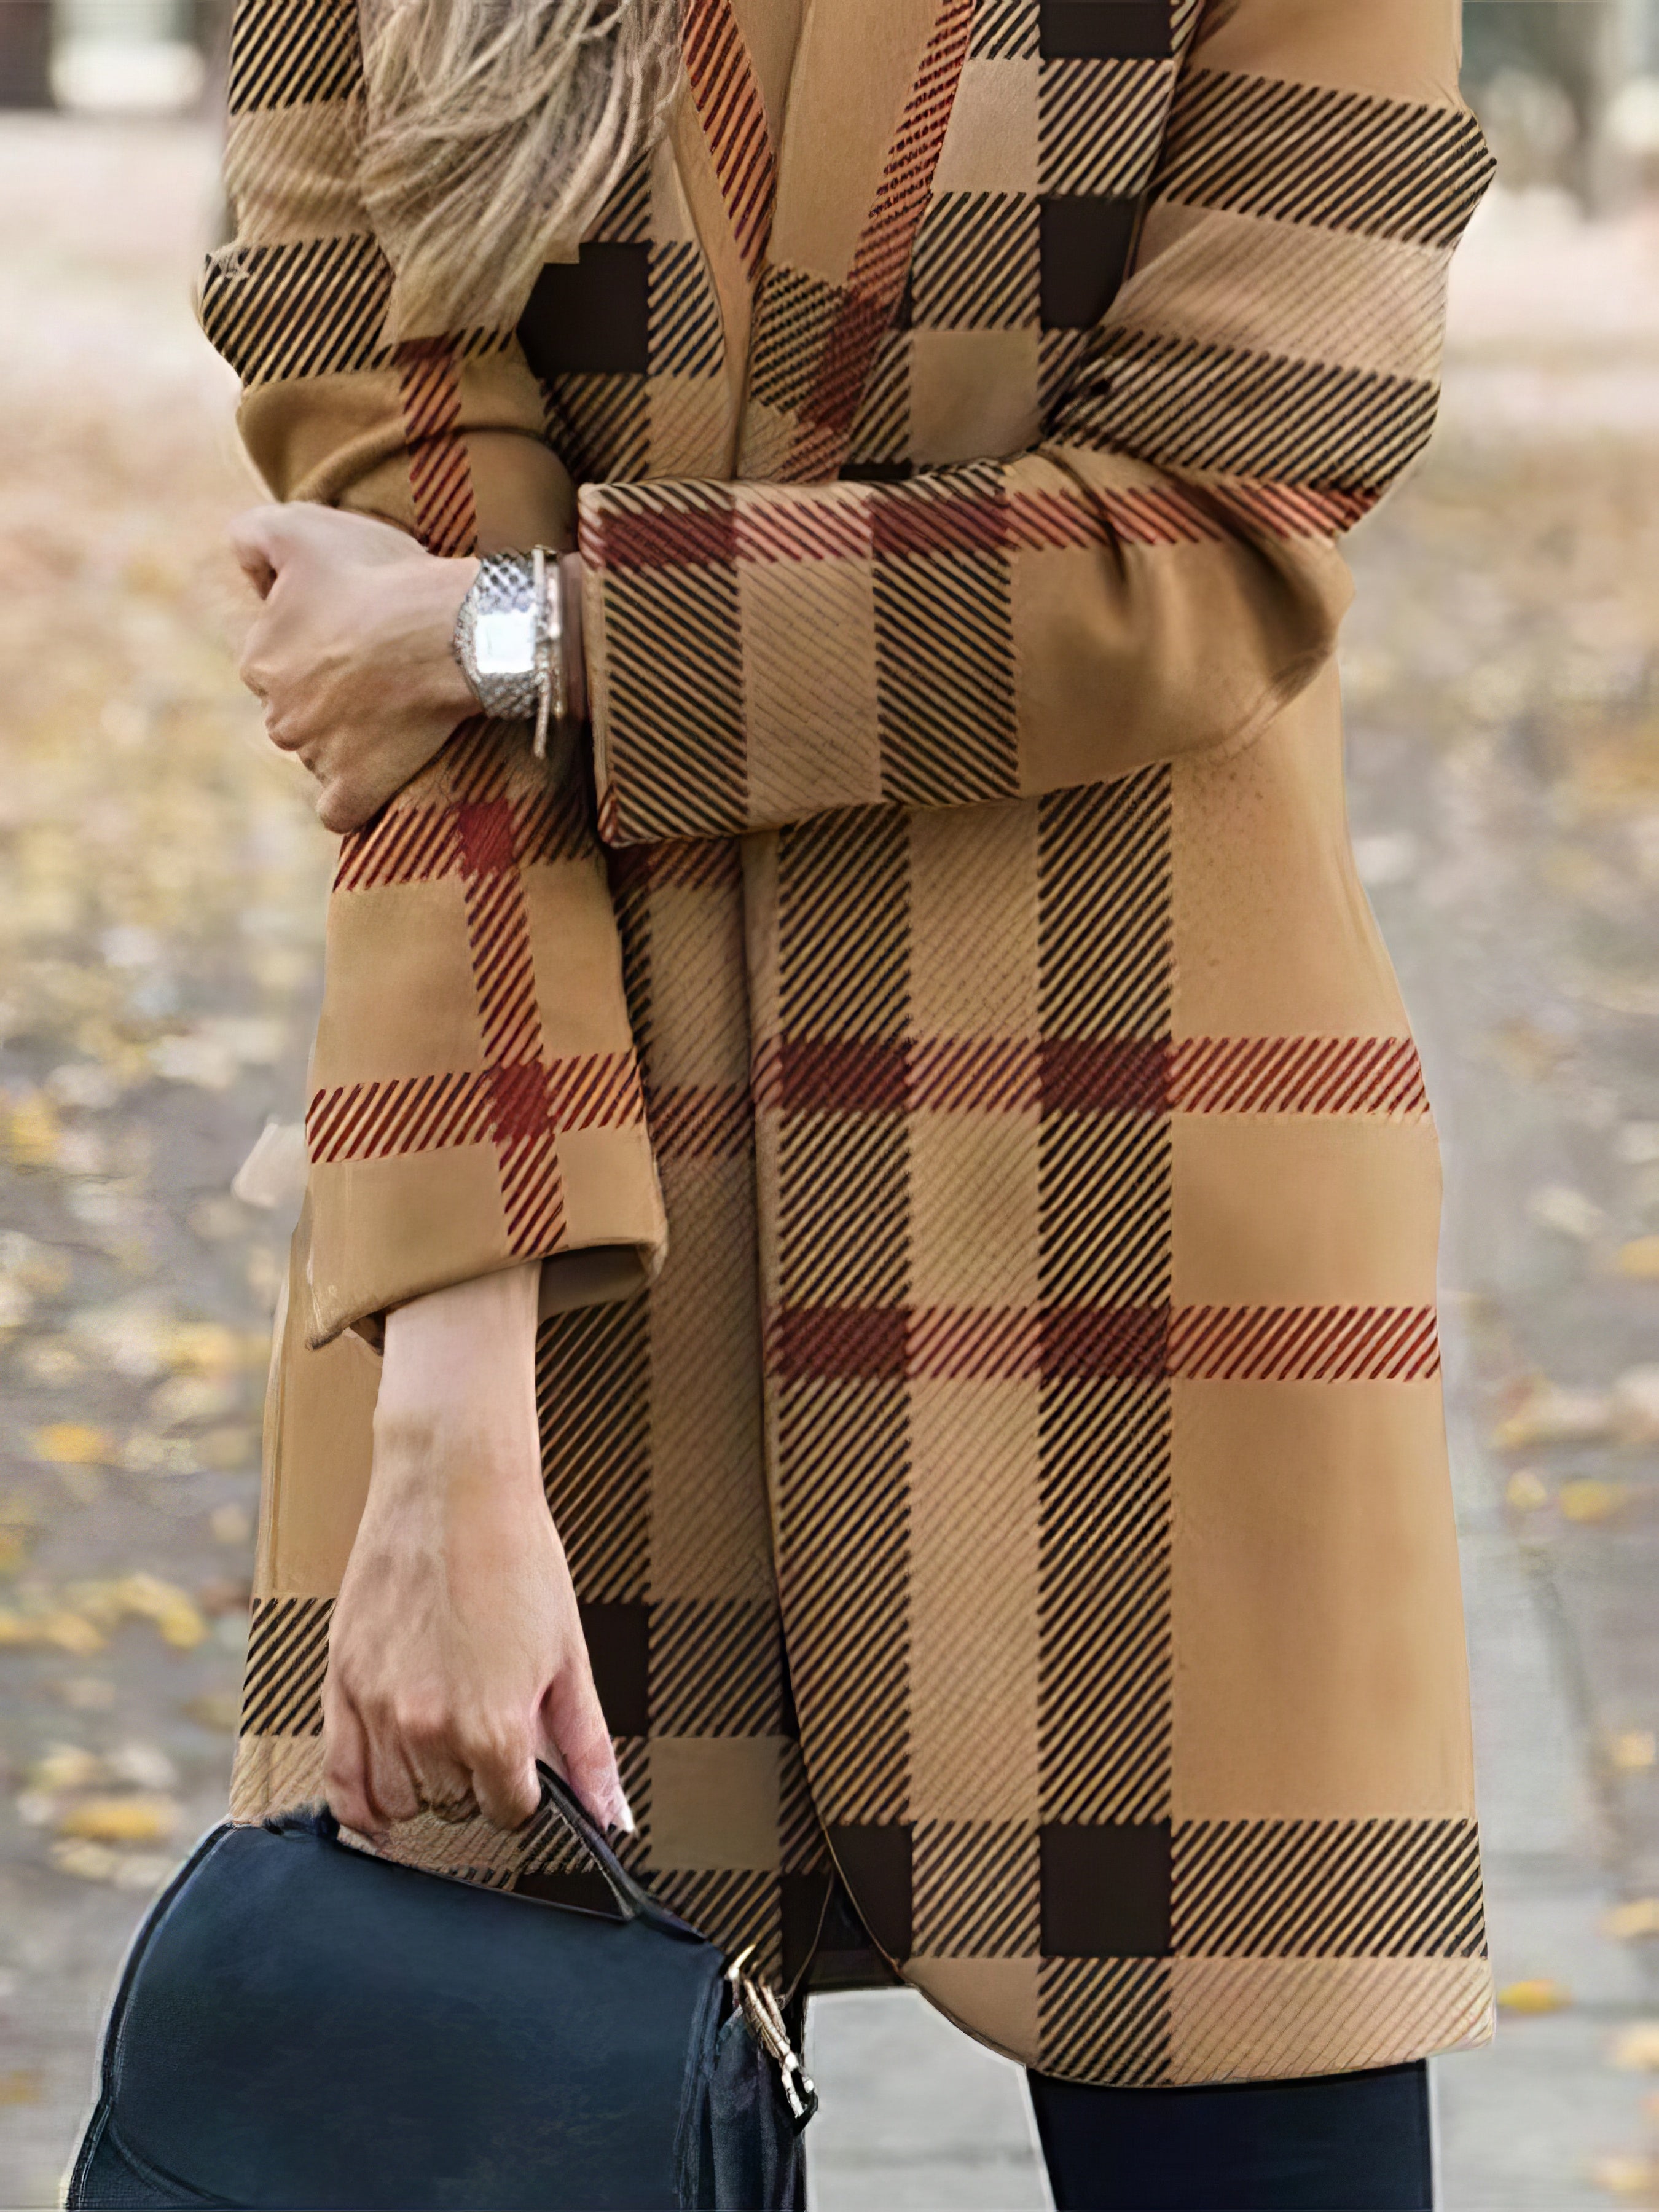 Women's Coats Fashion Printed Stand-Collar Woolen Coat